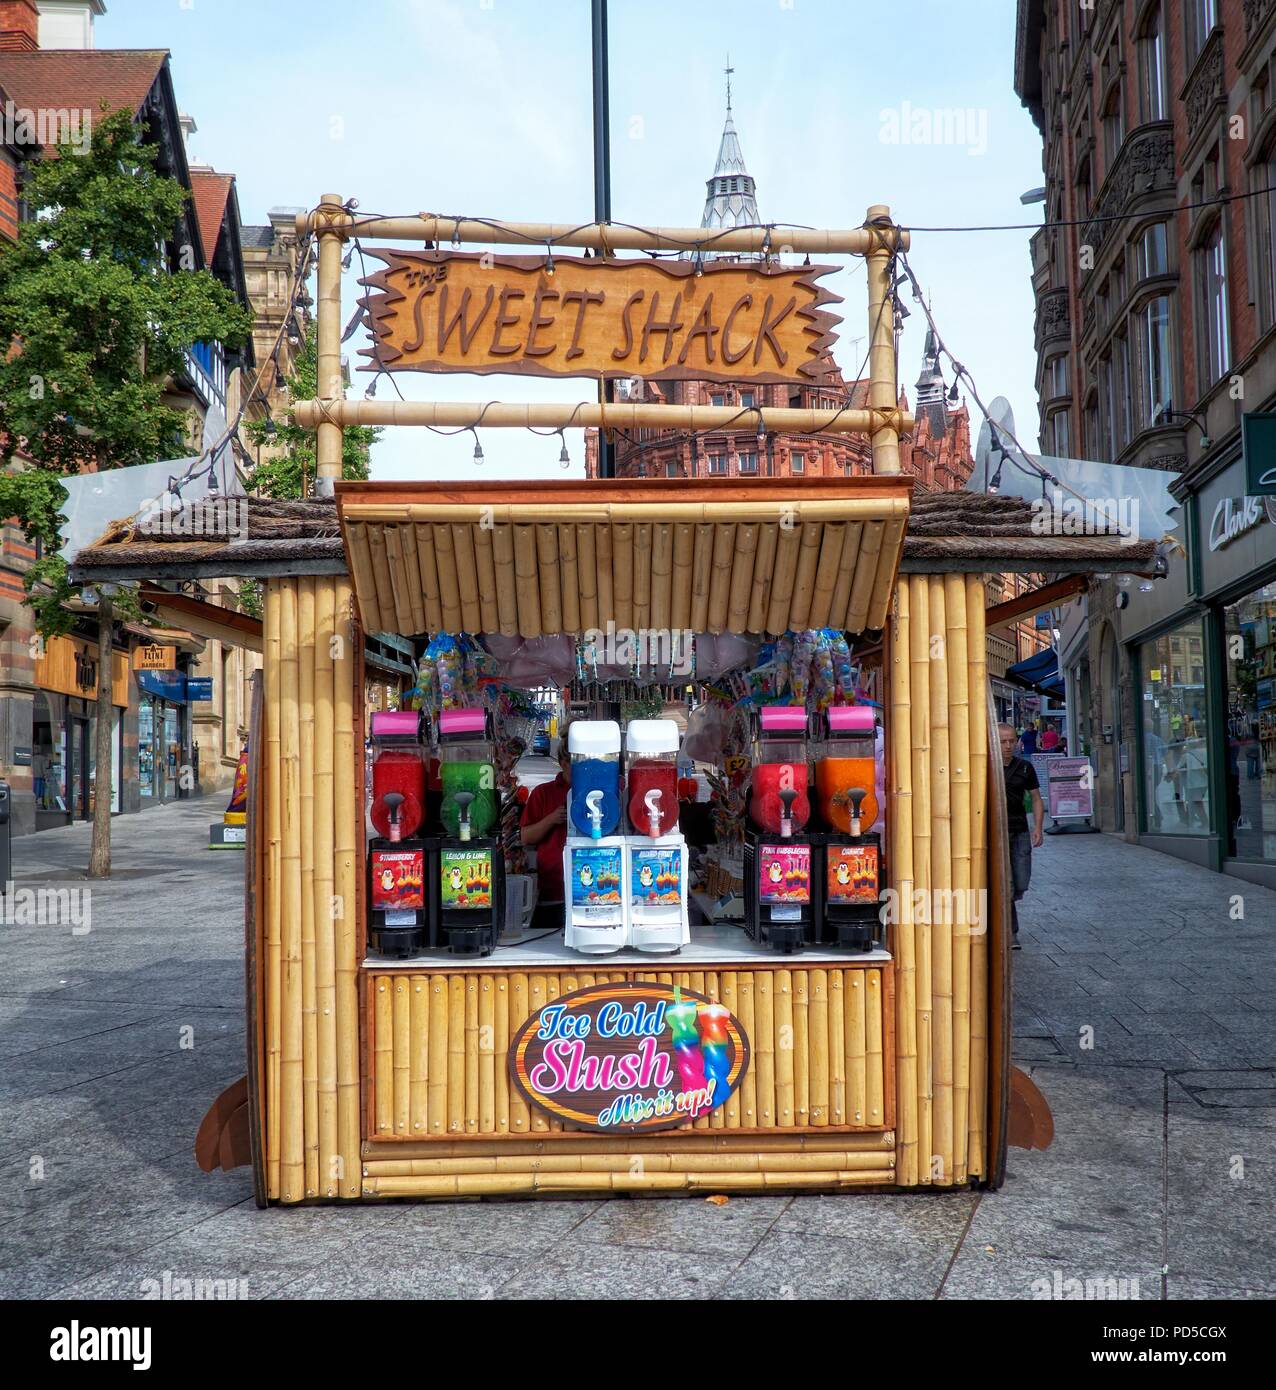 Slush dispensers on an outdoor stall kiosk,Nottingham,England,UK Stock Photo